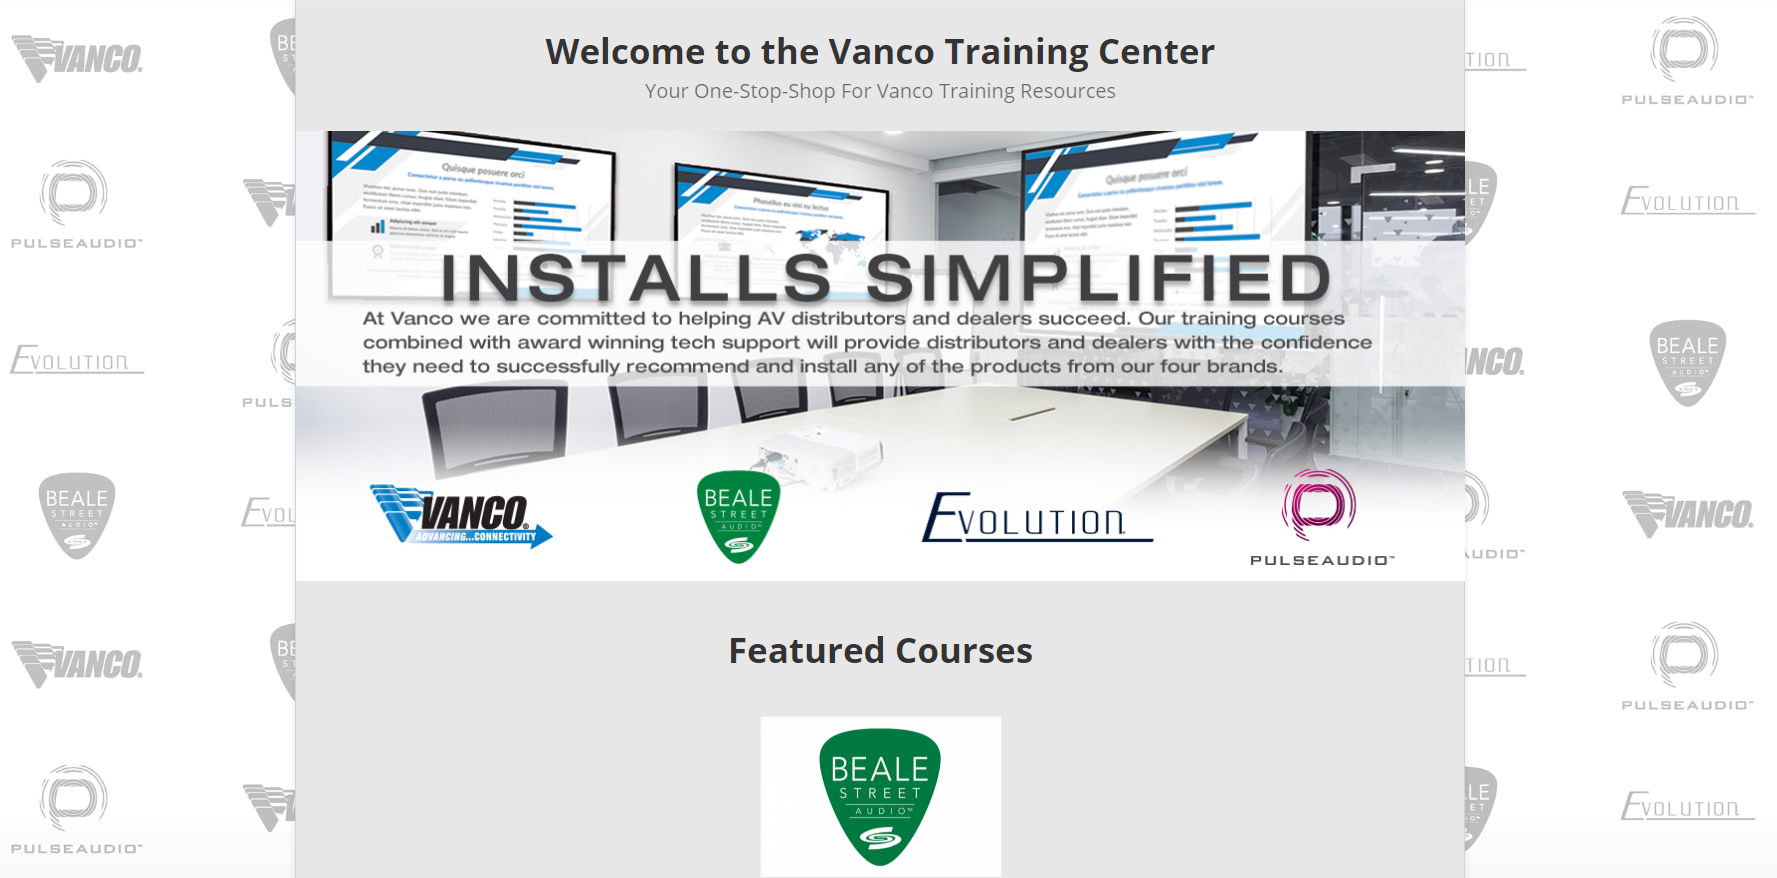 Vanco Launches New Online Training Center